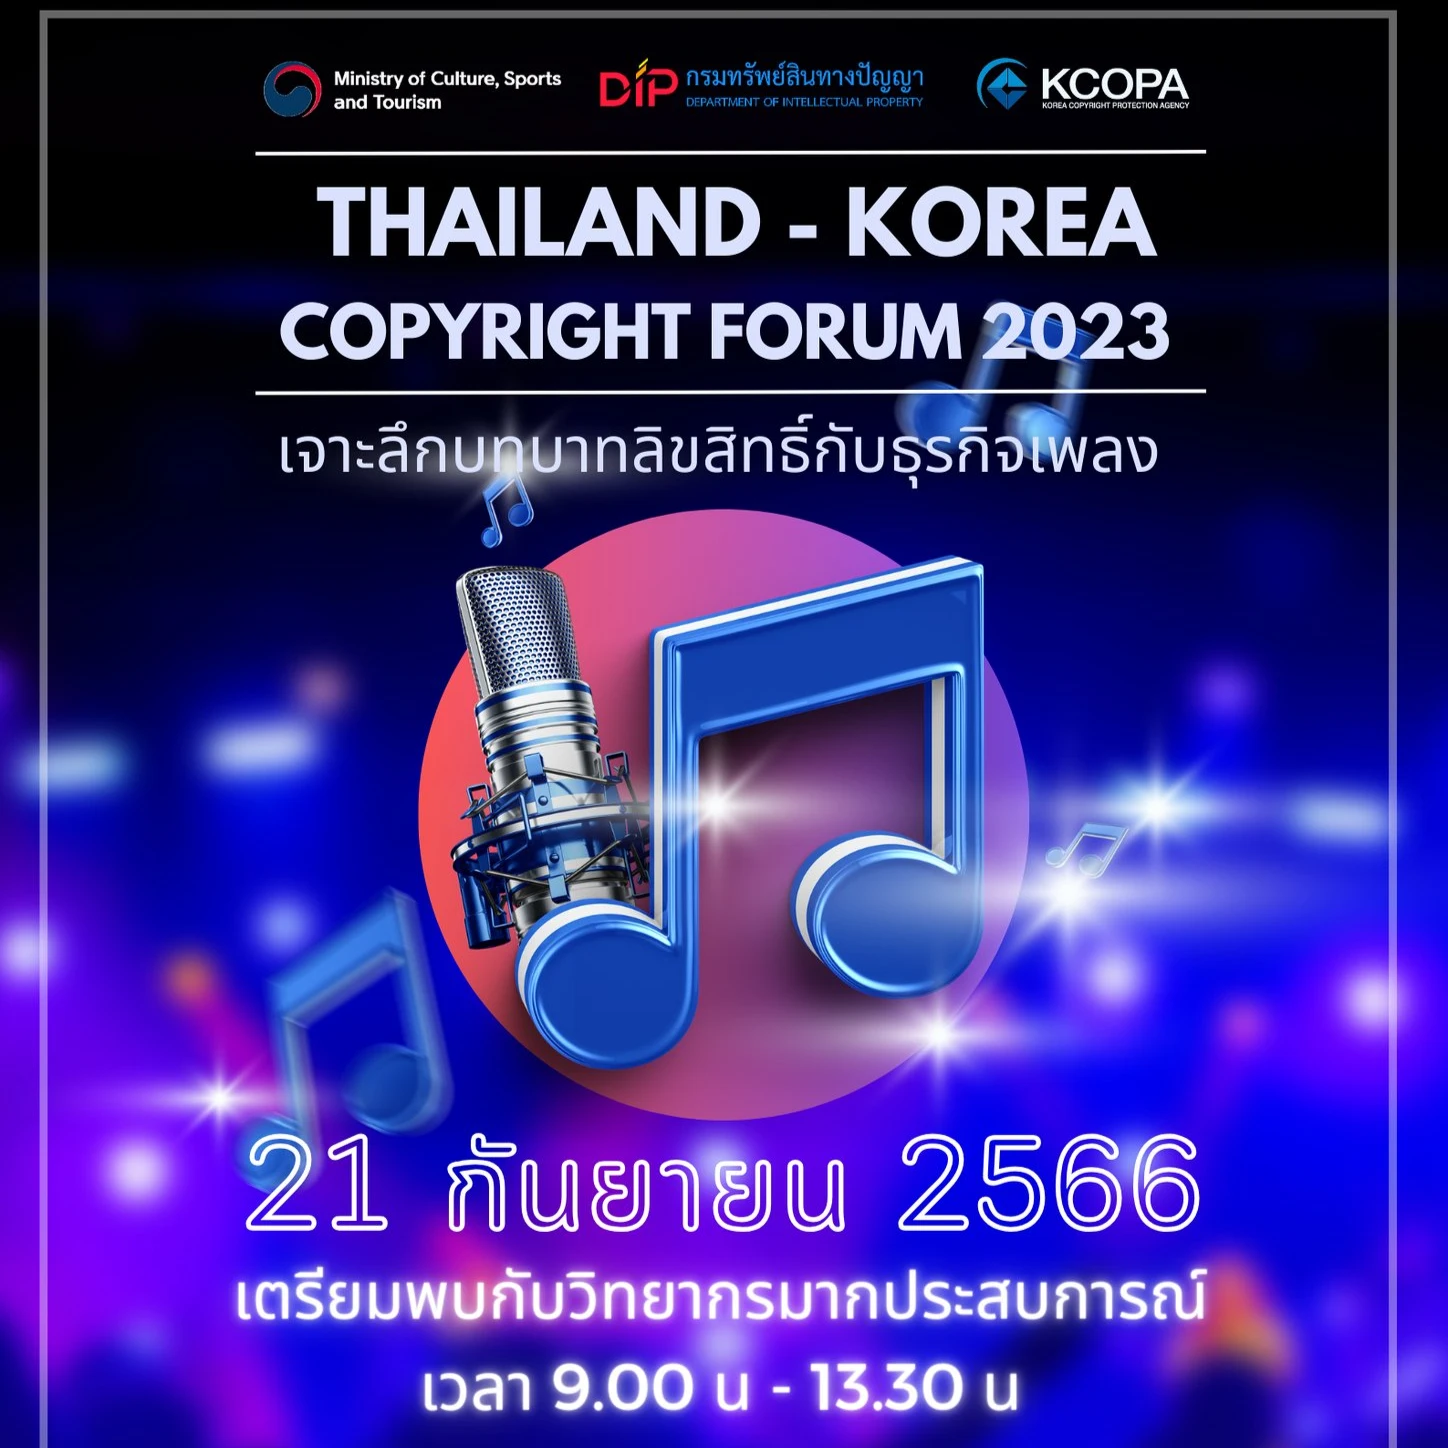 Korea - Thailand Copyright Forum 2023